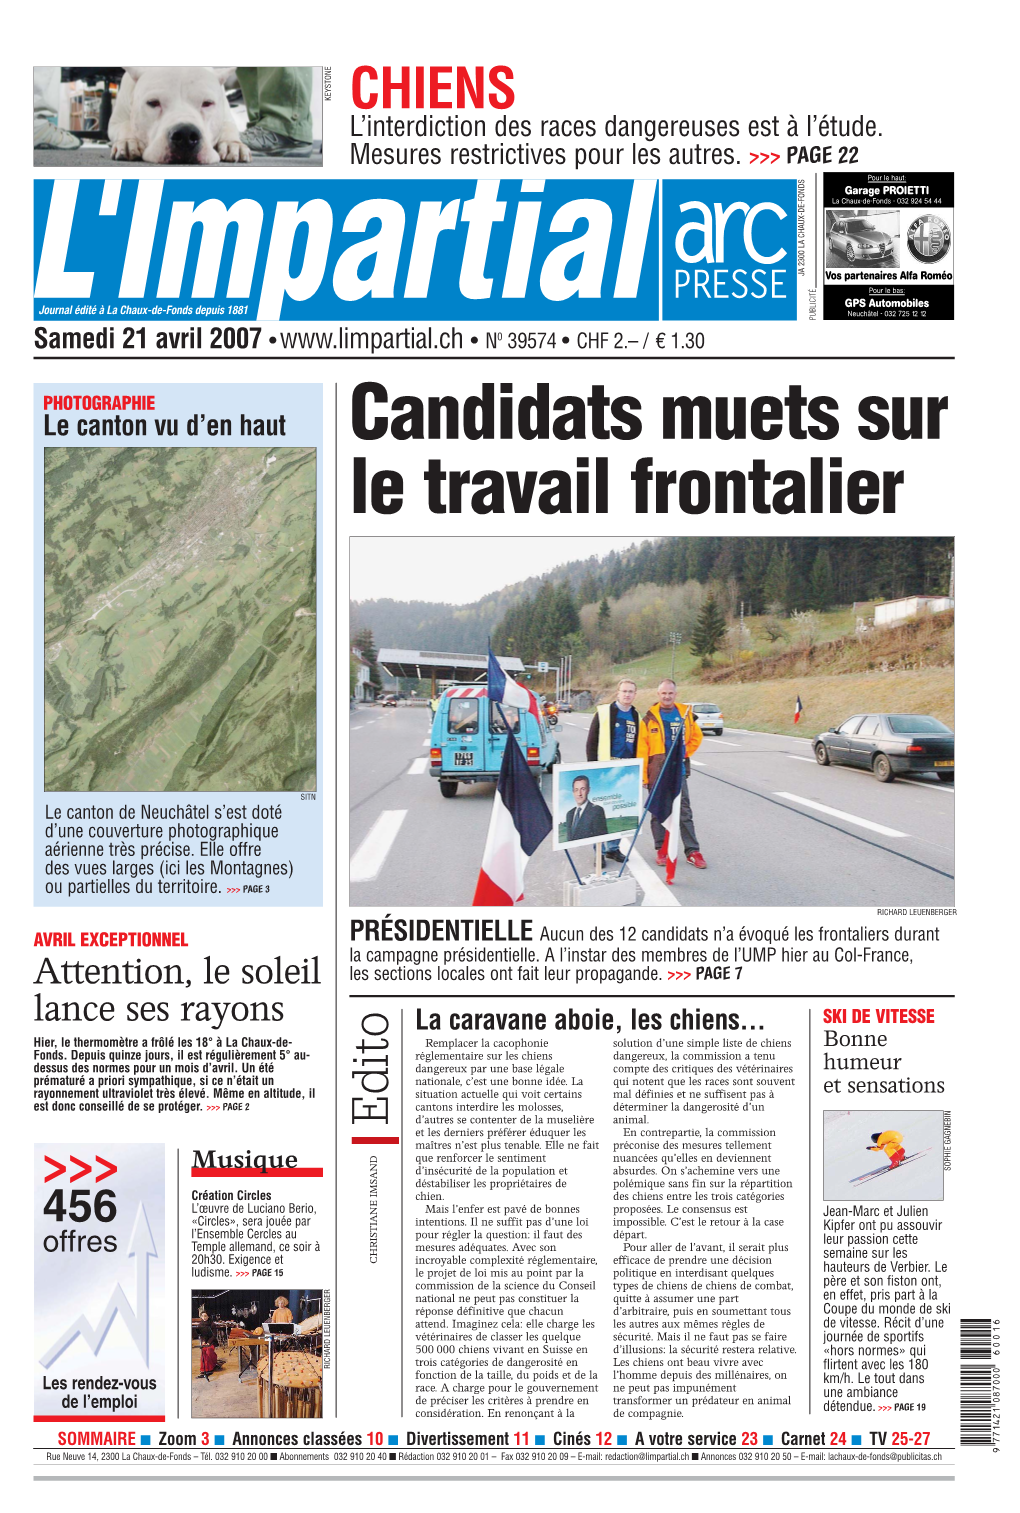 Candidats Muets Sur Le Travail Frontalier